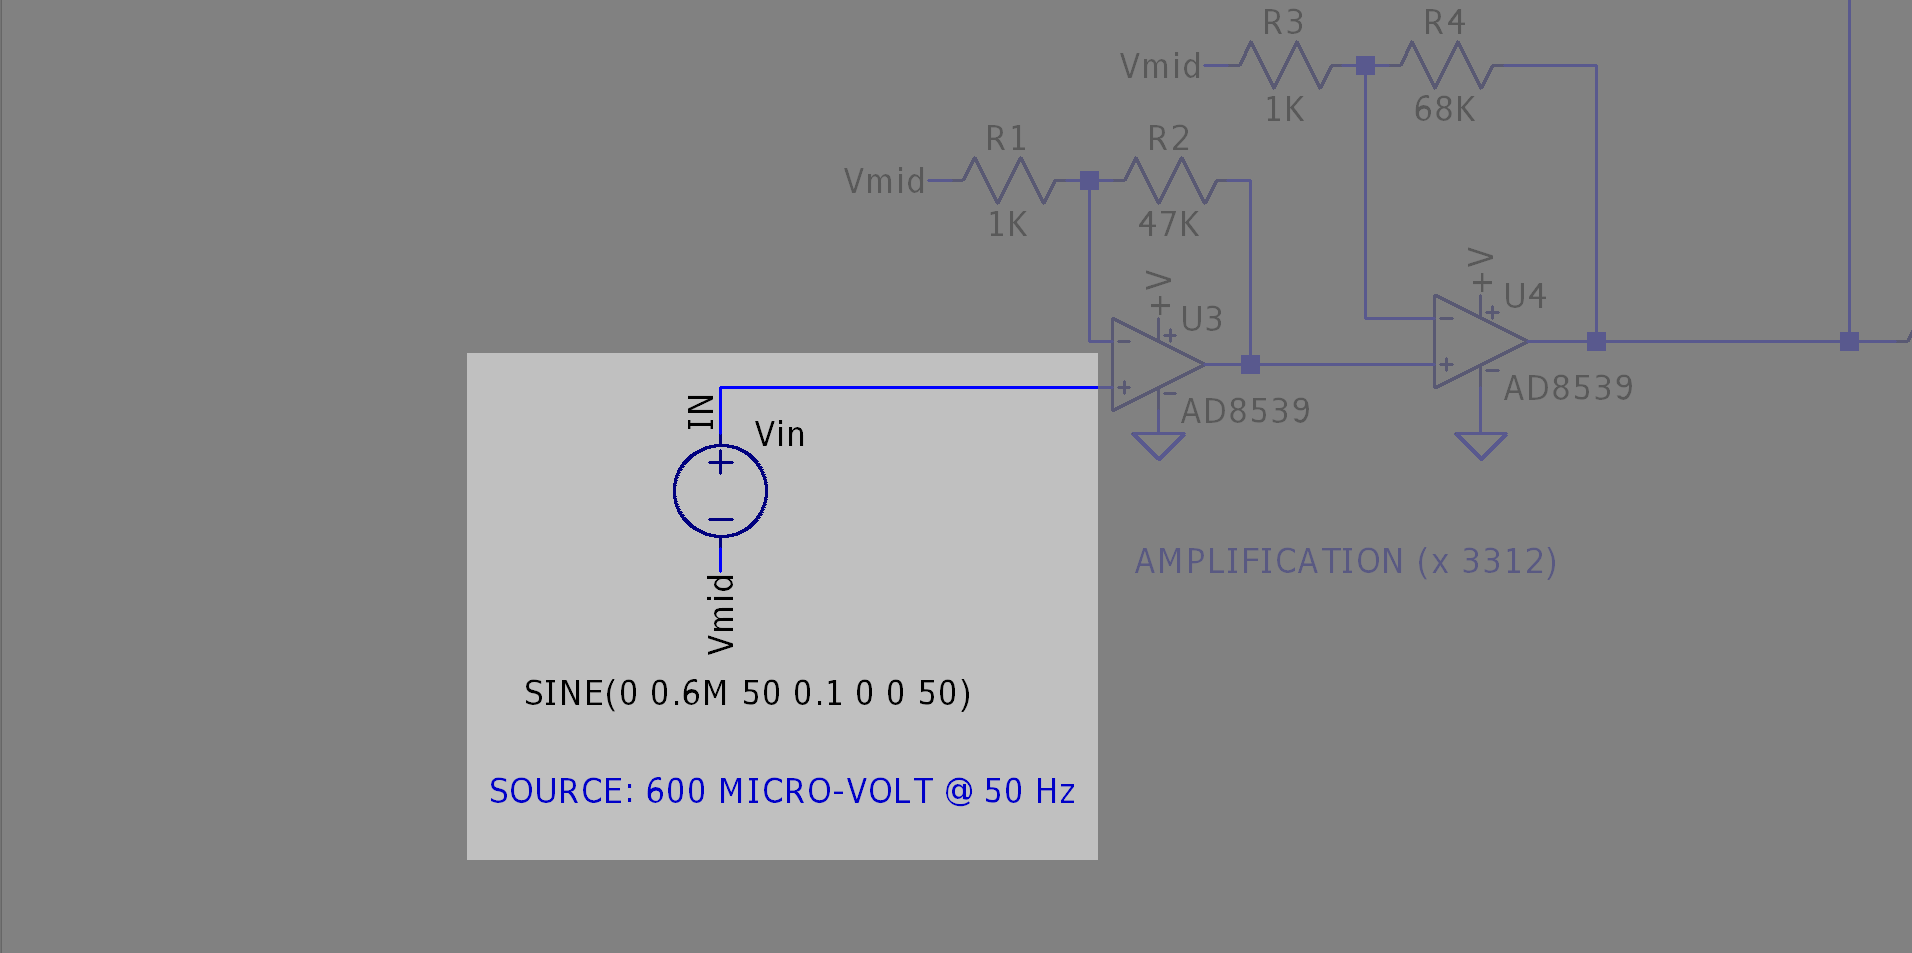 Rogoswki coil voltage signal simulation